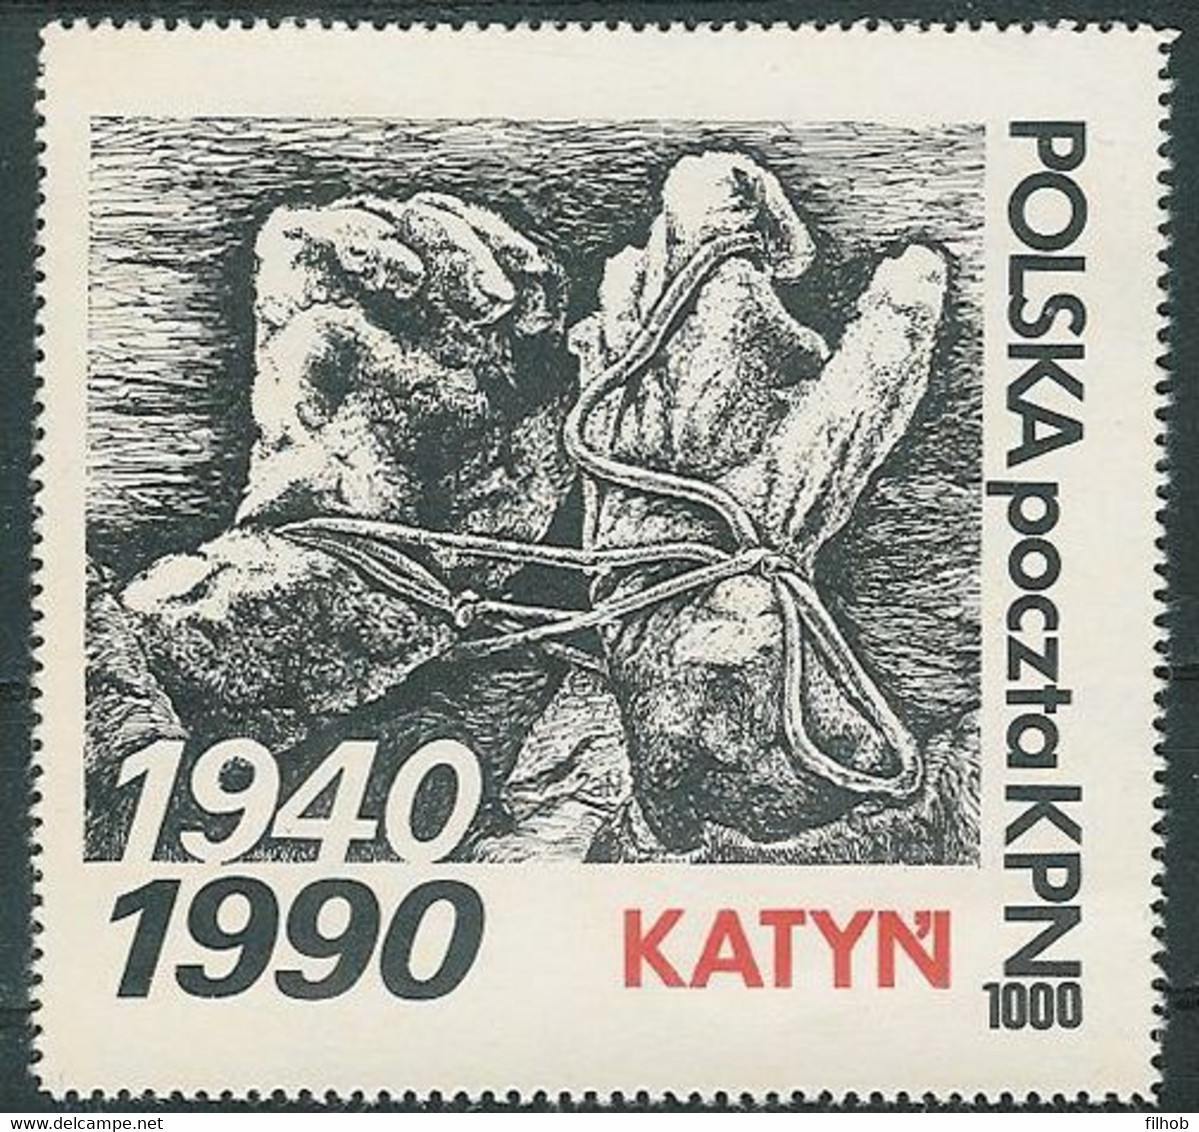 Poland SOLIDARITY (S036): KPN Katyn (1) Hand - Solidarnosc-Vignetten